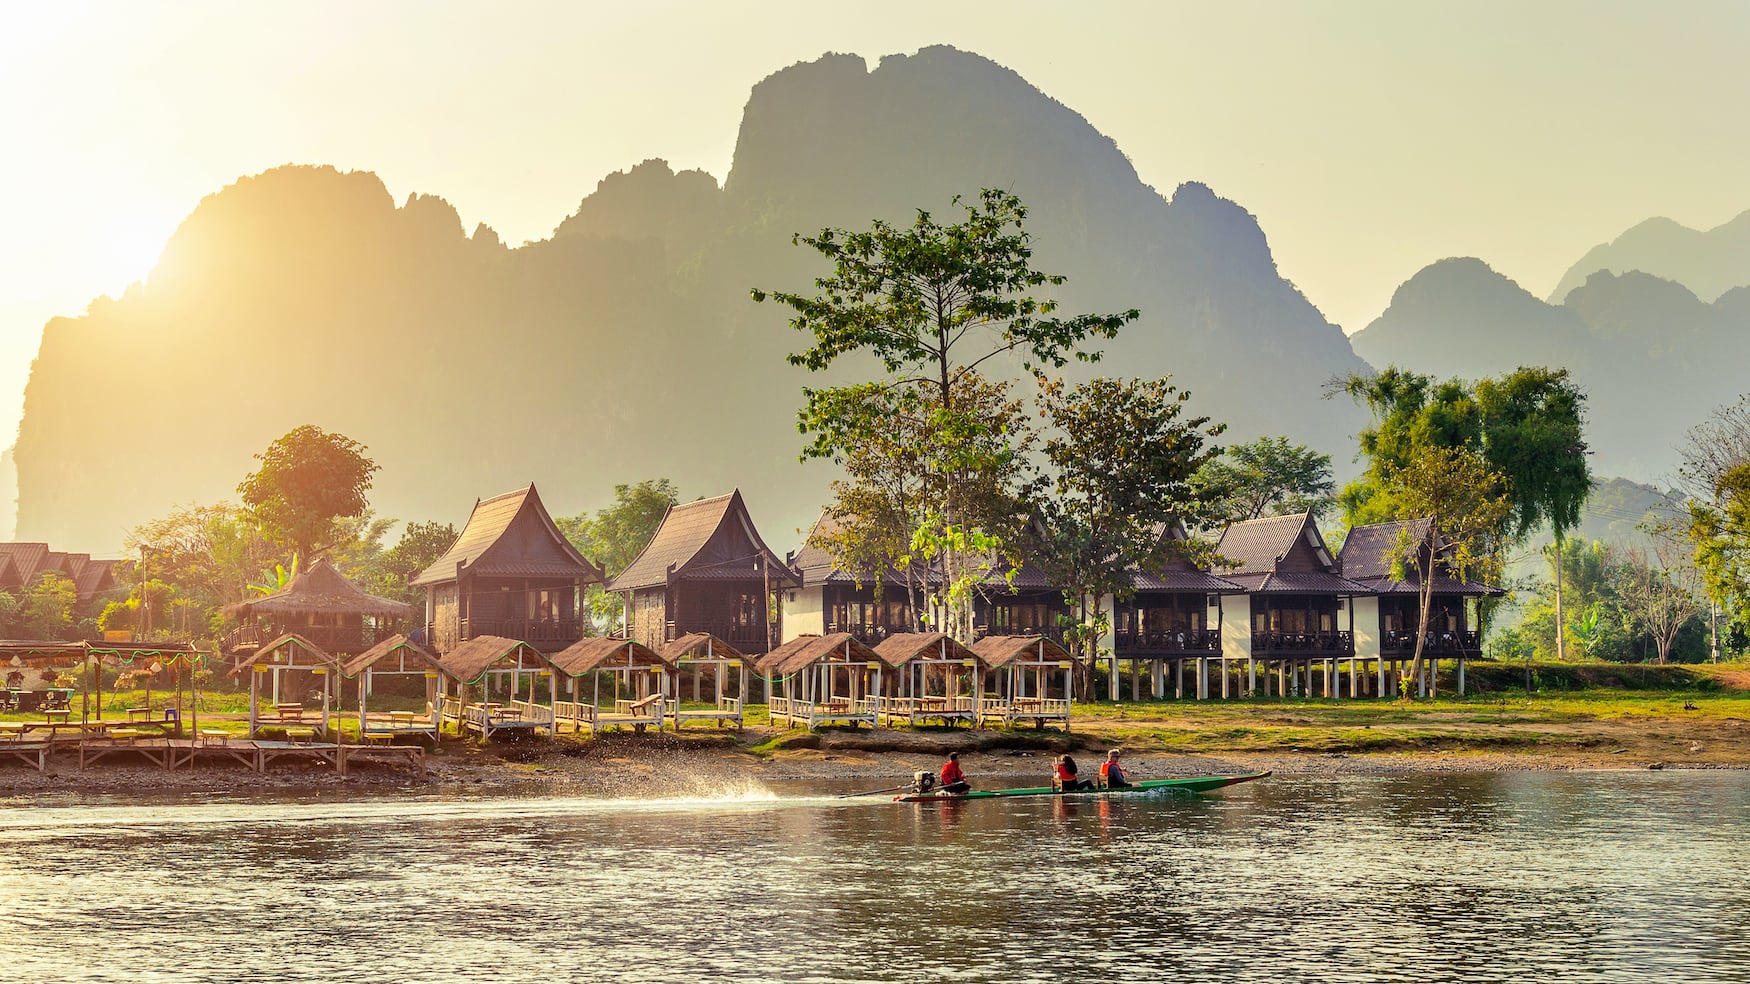 der Nam Song River in Laos